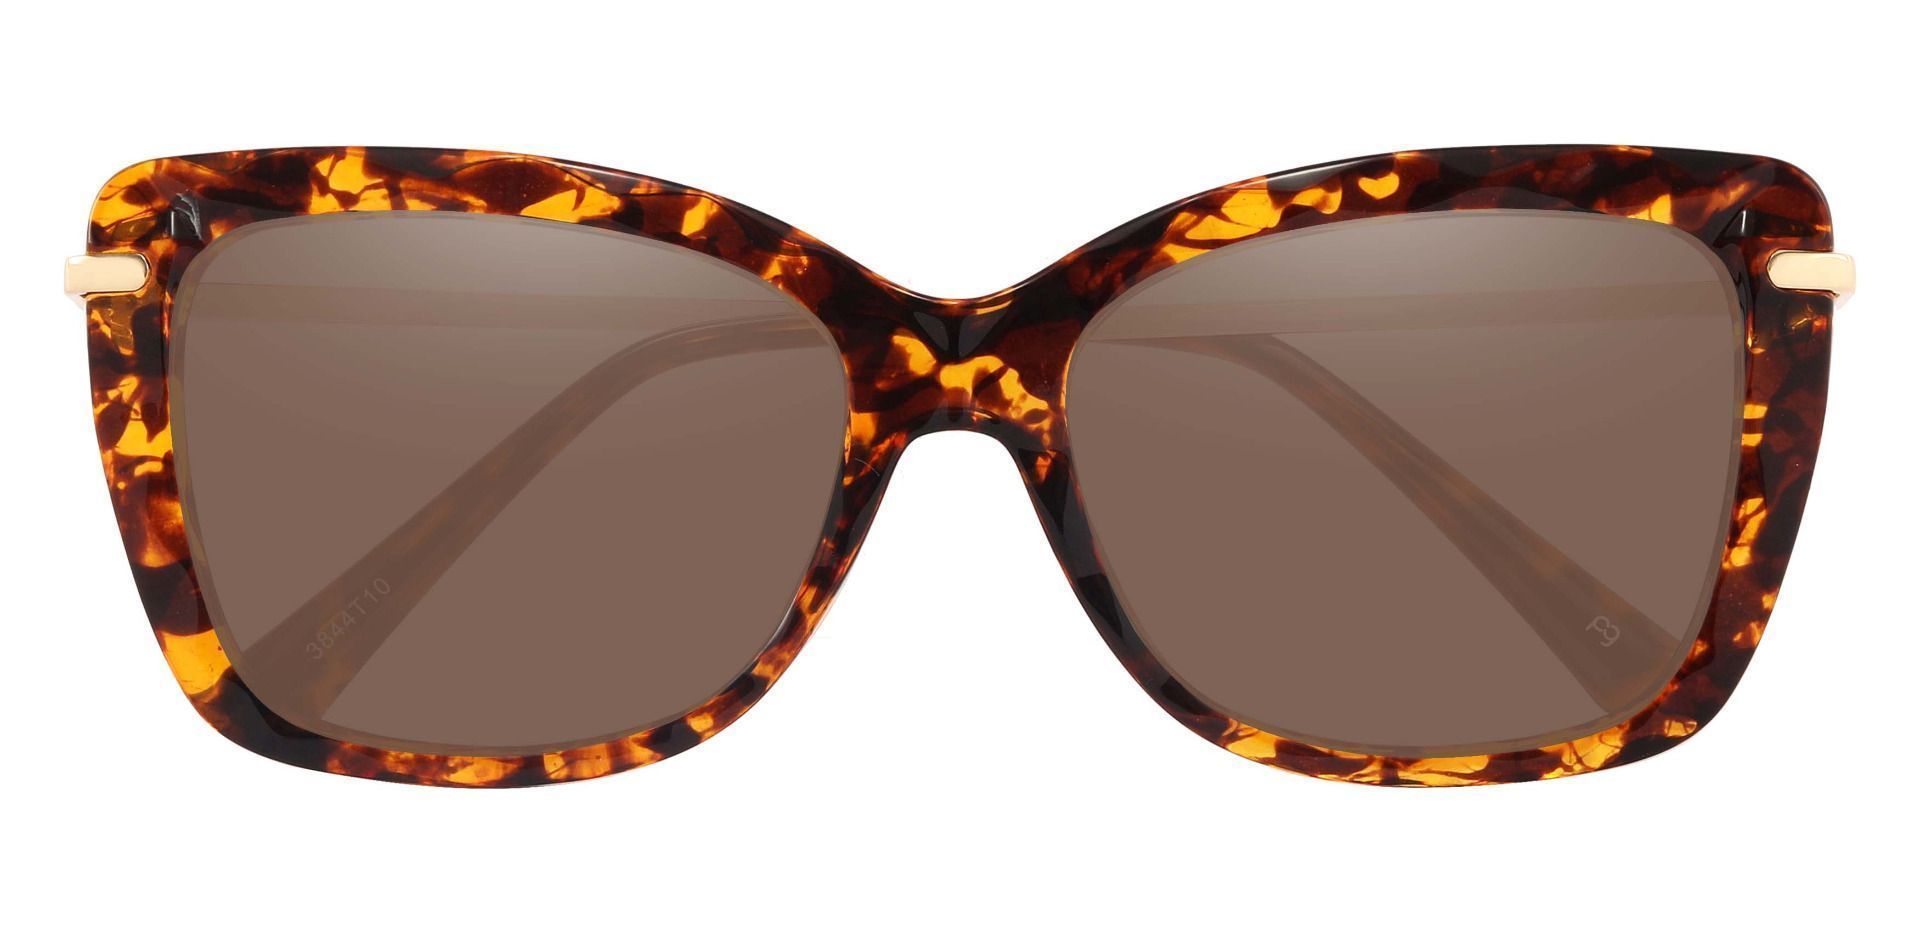 Shoshanna Rectangle Lined Bifocal Sunglasses - Tortoise Frame With Brown Lenses